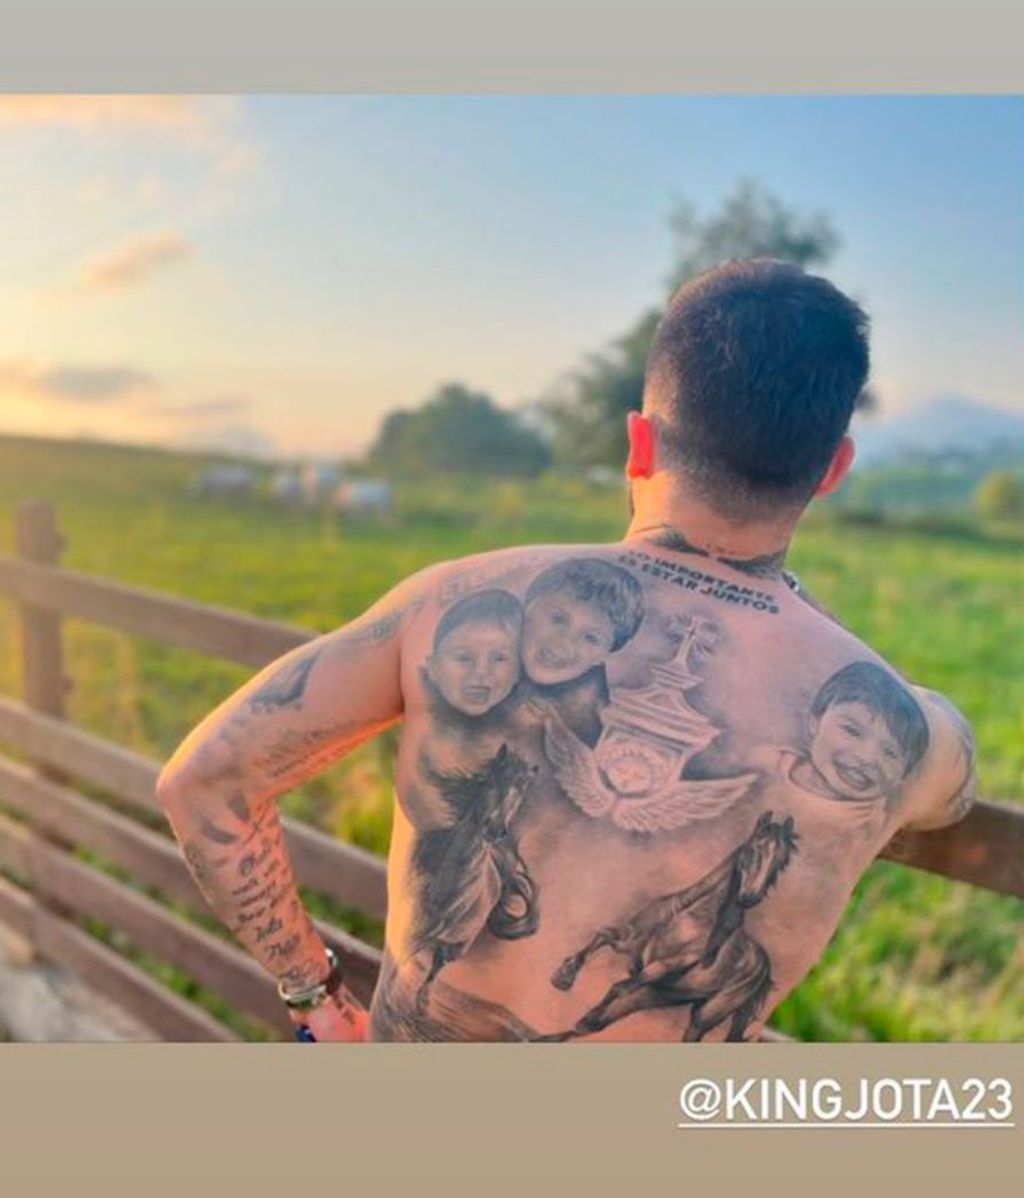 tatus jota mensaje